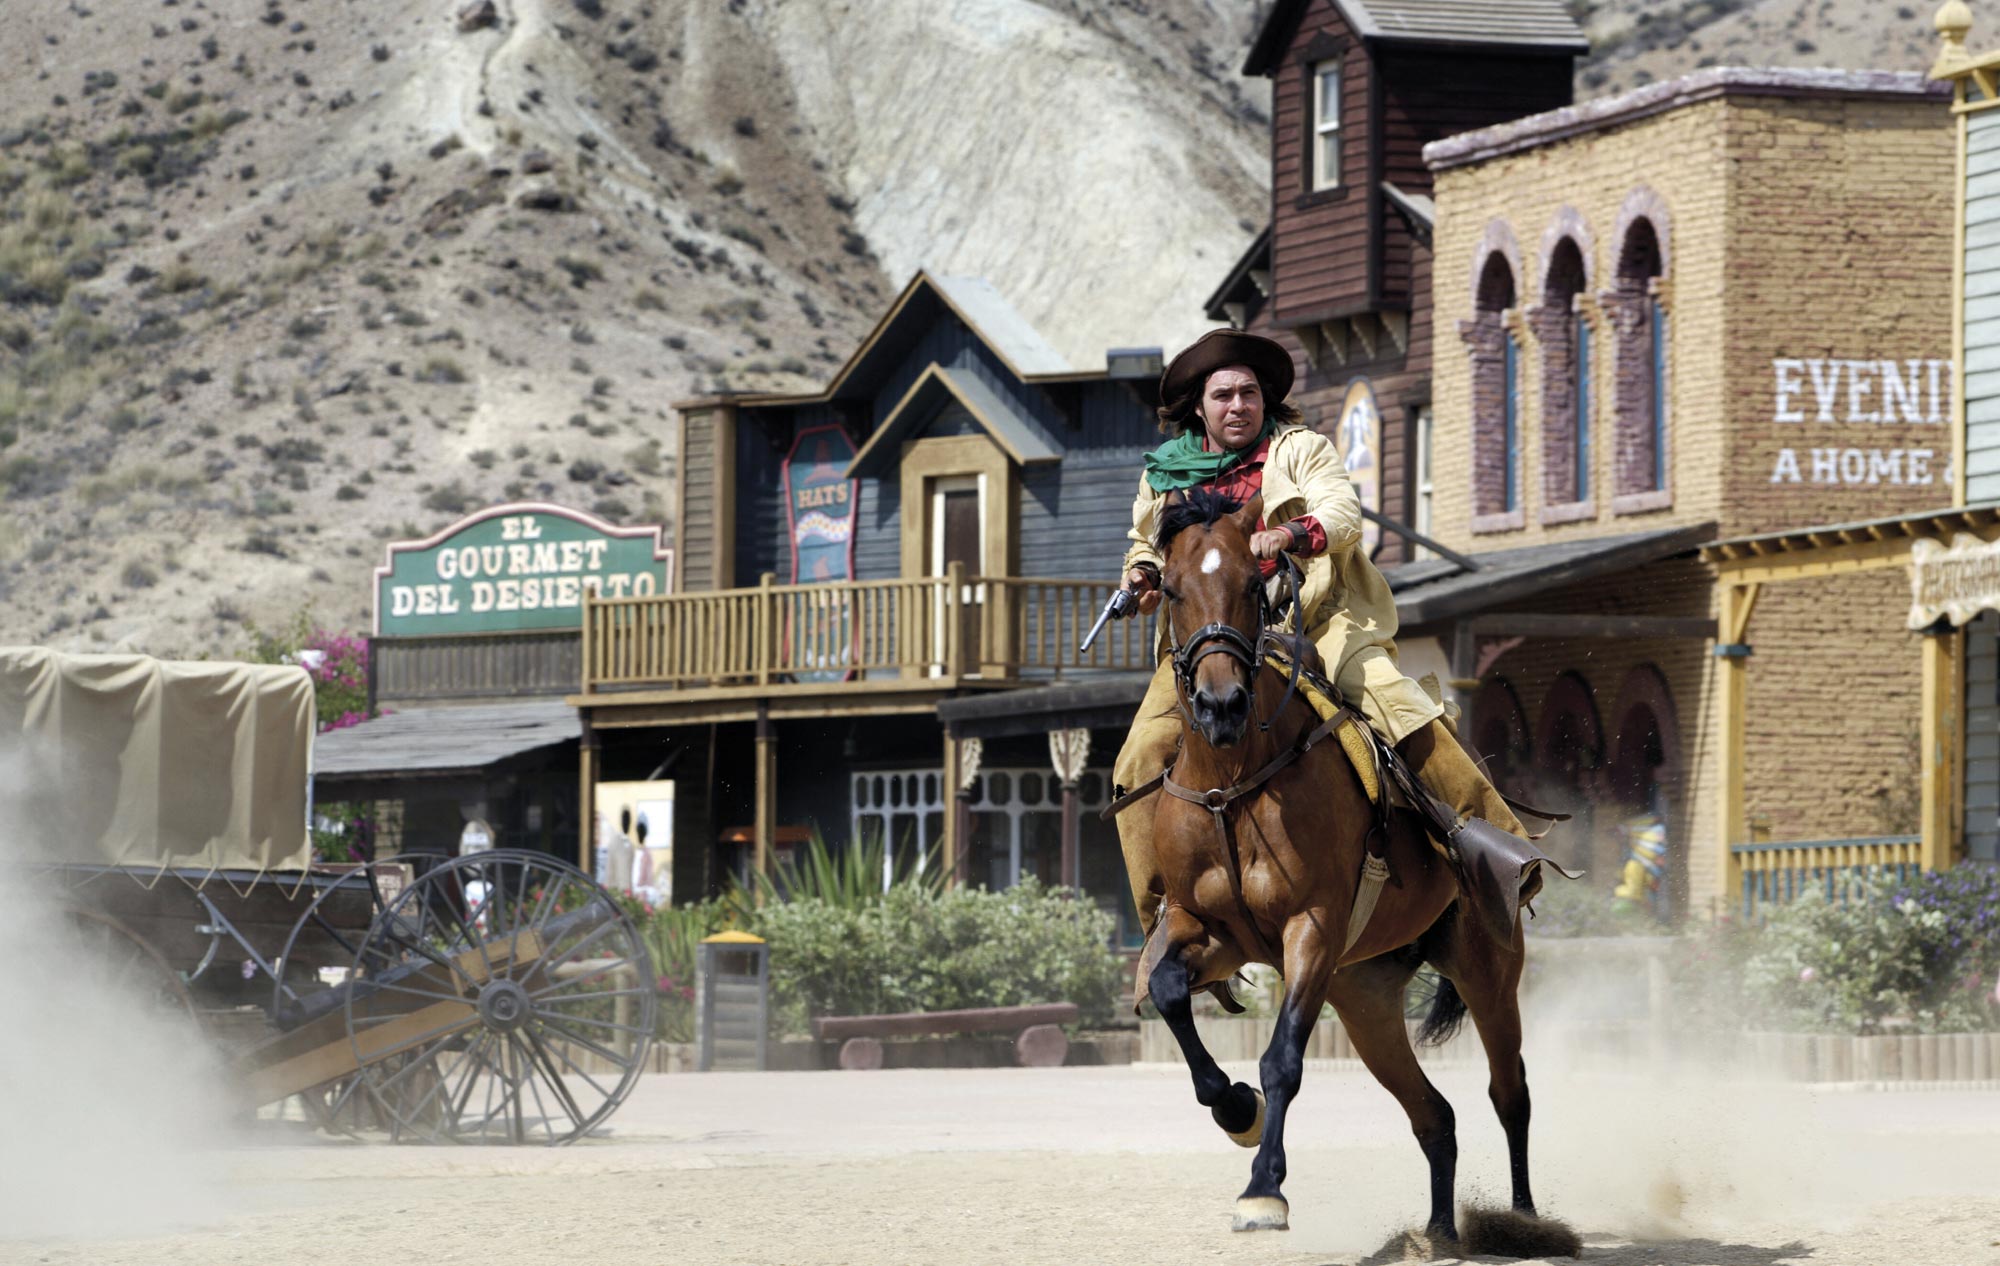 Cowboy shootout at Spaghetti Western film set